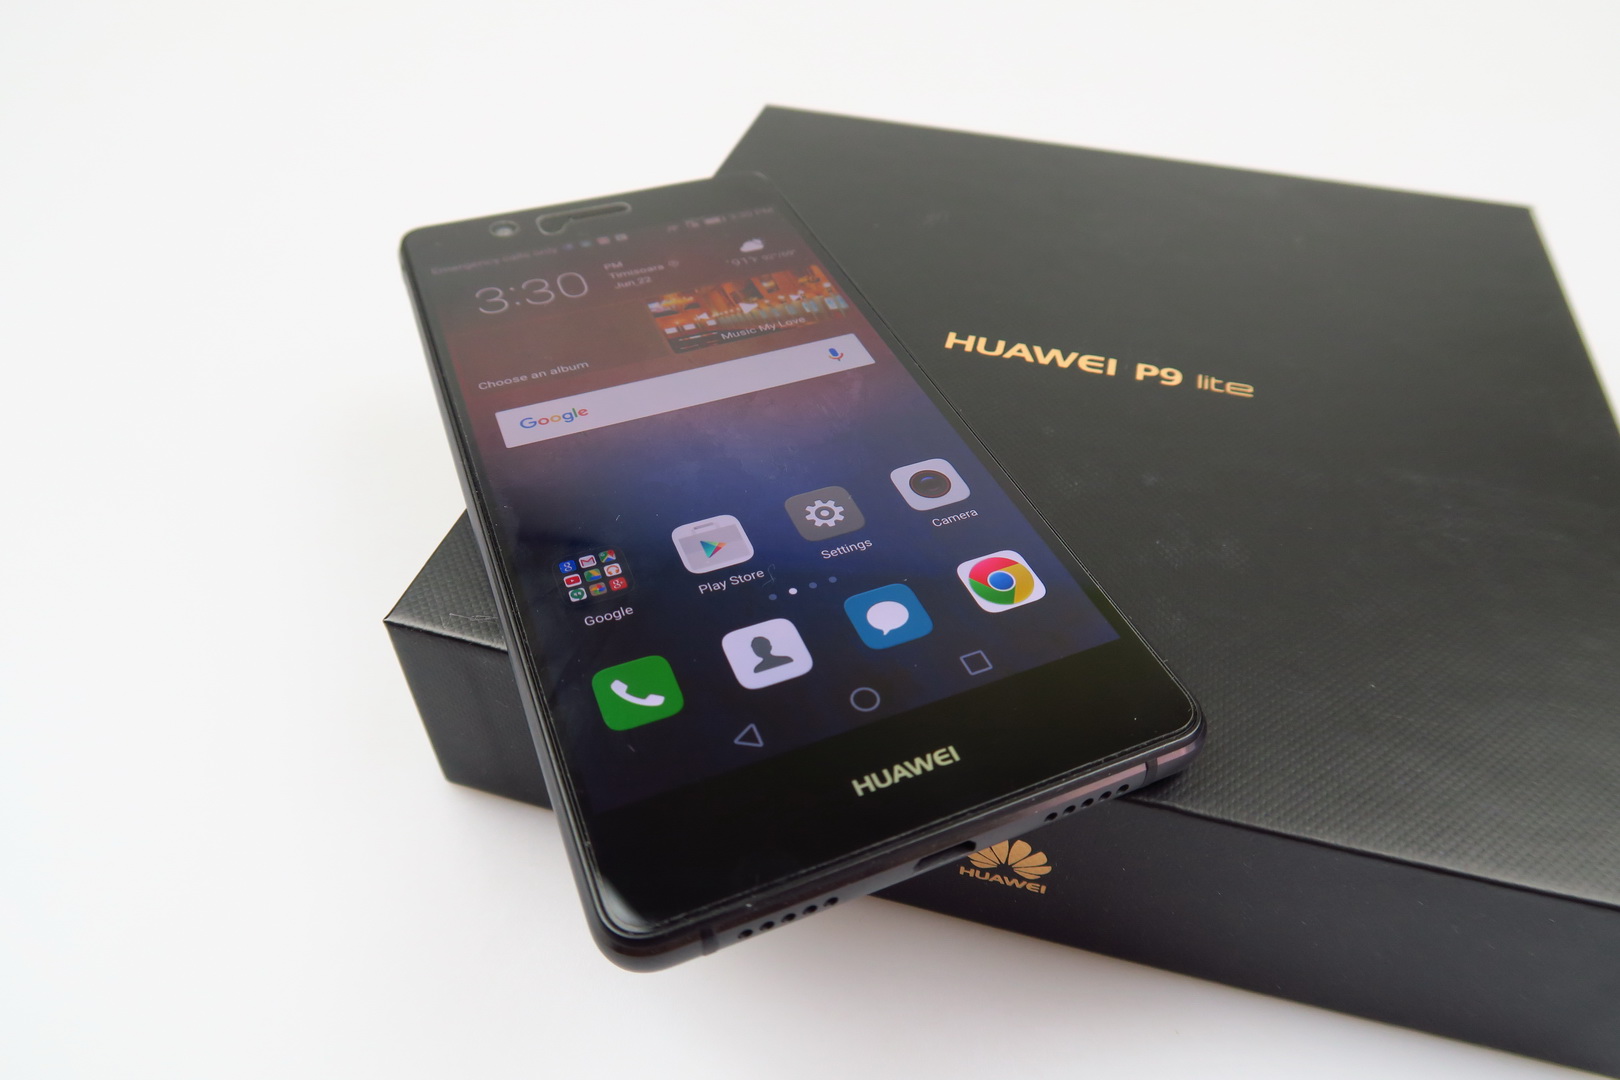 Huawei P9 Lite Unboxing: One of the Lightest Phones I've Felt